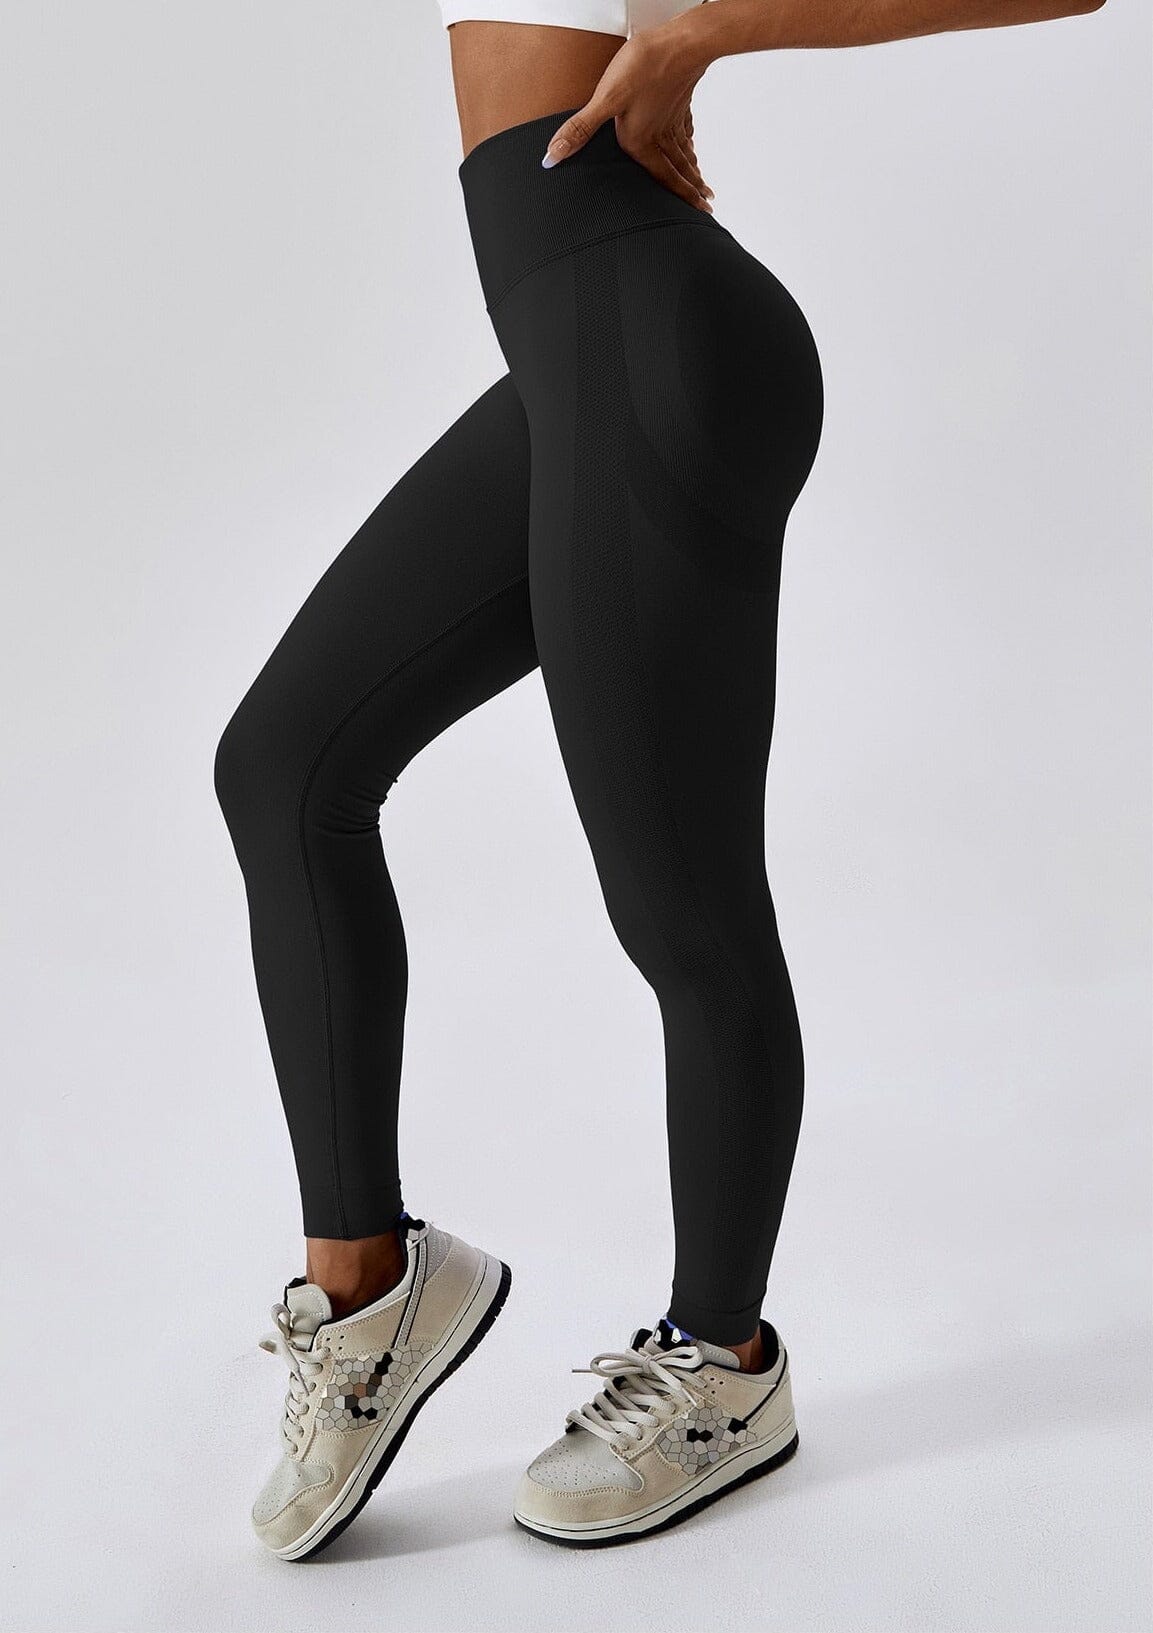 Aurola Store, Pants & Jumpsuits, Aurola Workout Leggings For Women  Seamless Scrunch Tights Tummy Control